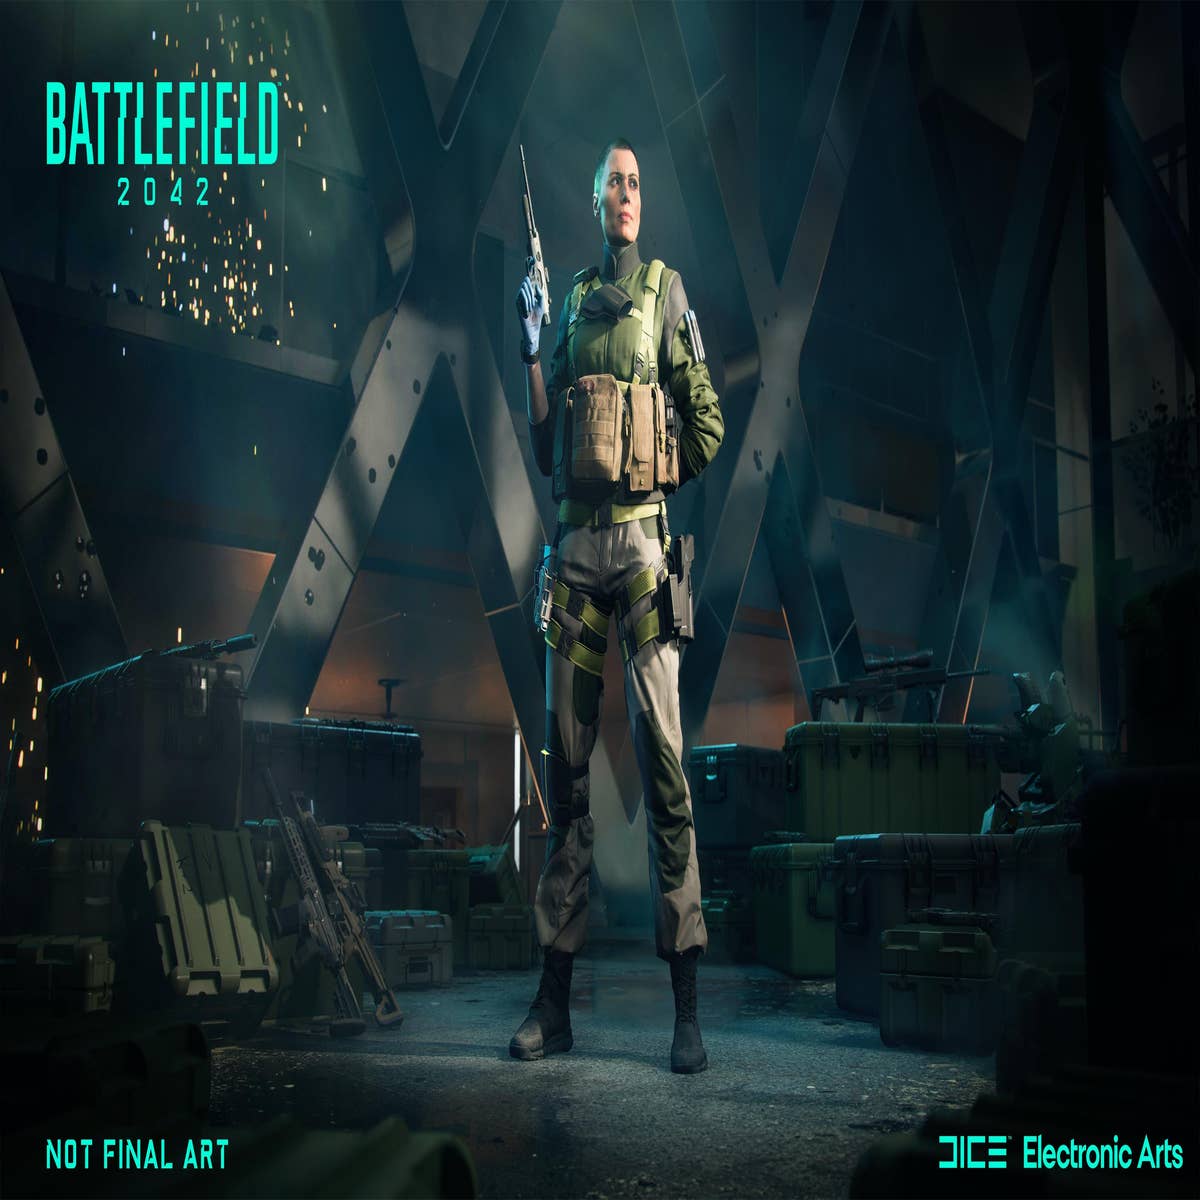 Watch 'Battlefield 2042' gameplay footage of 'Battlefield Portal' mode